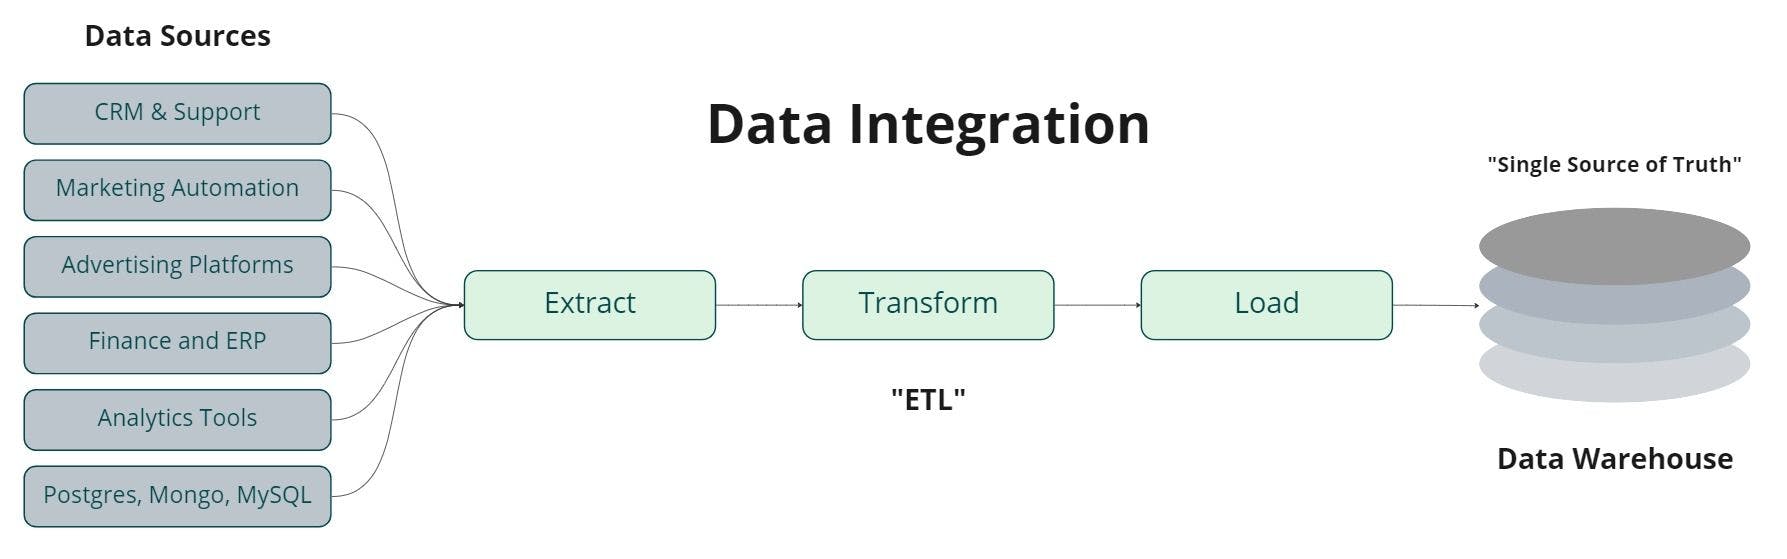 How data integration works